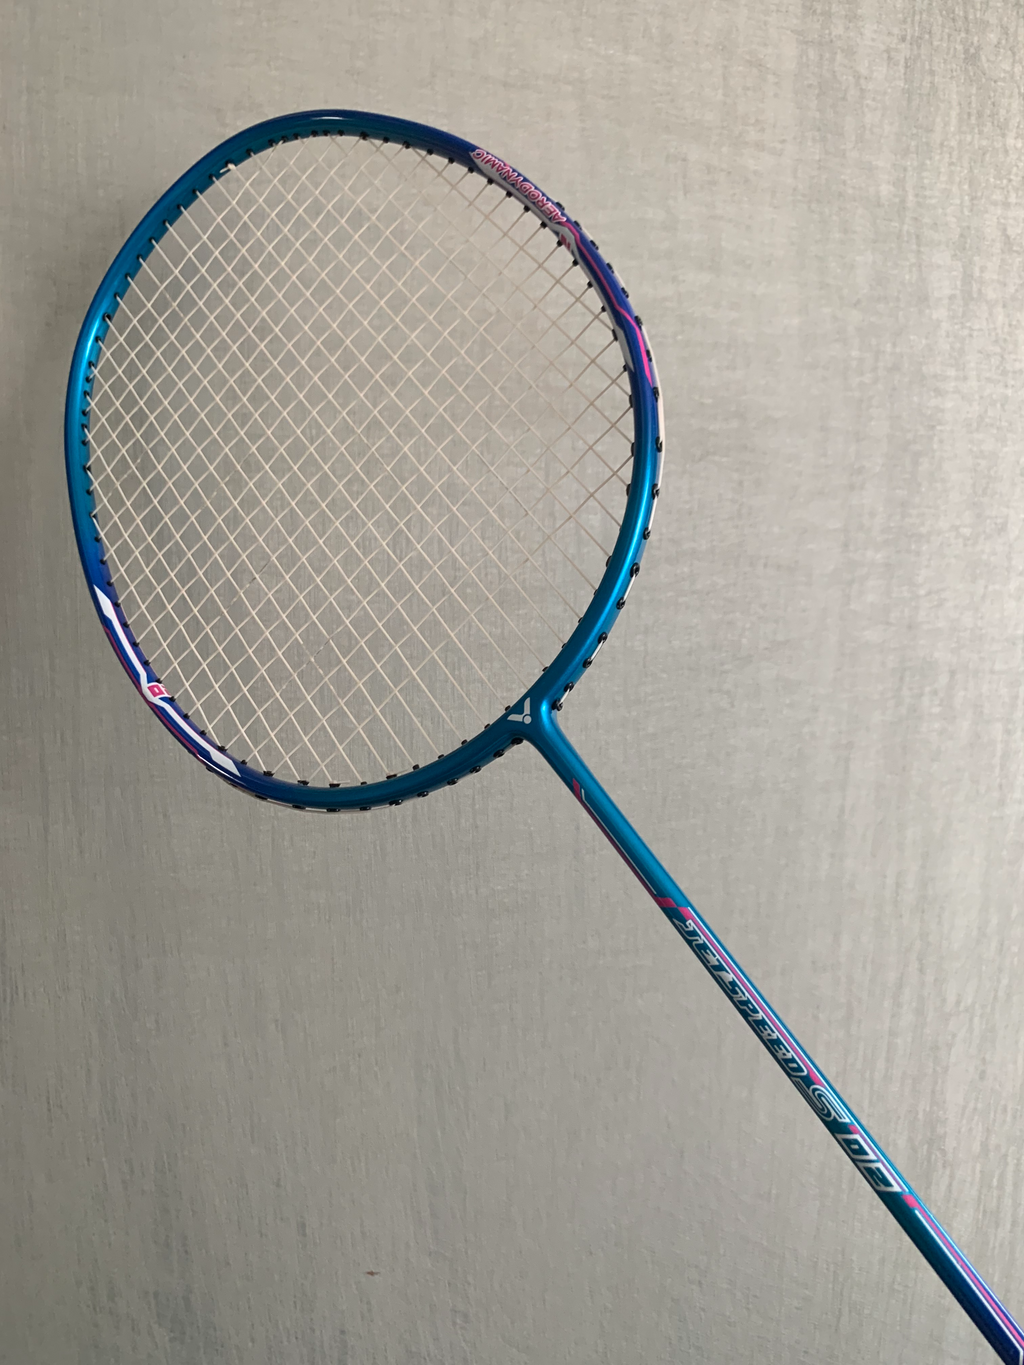 Victor Jetspeed S 02  Badminton Racket - badminton racket review